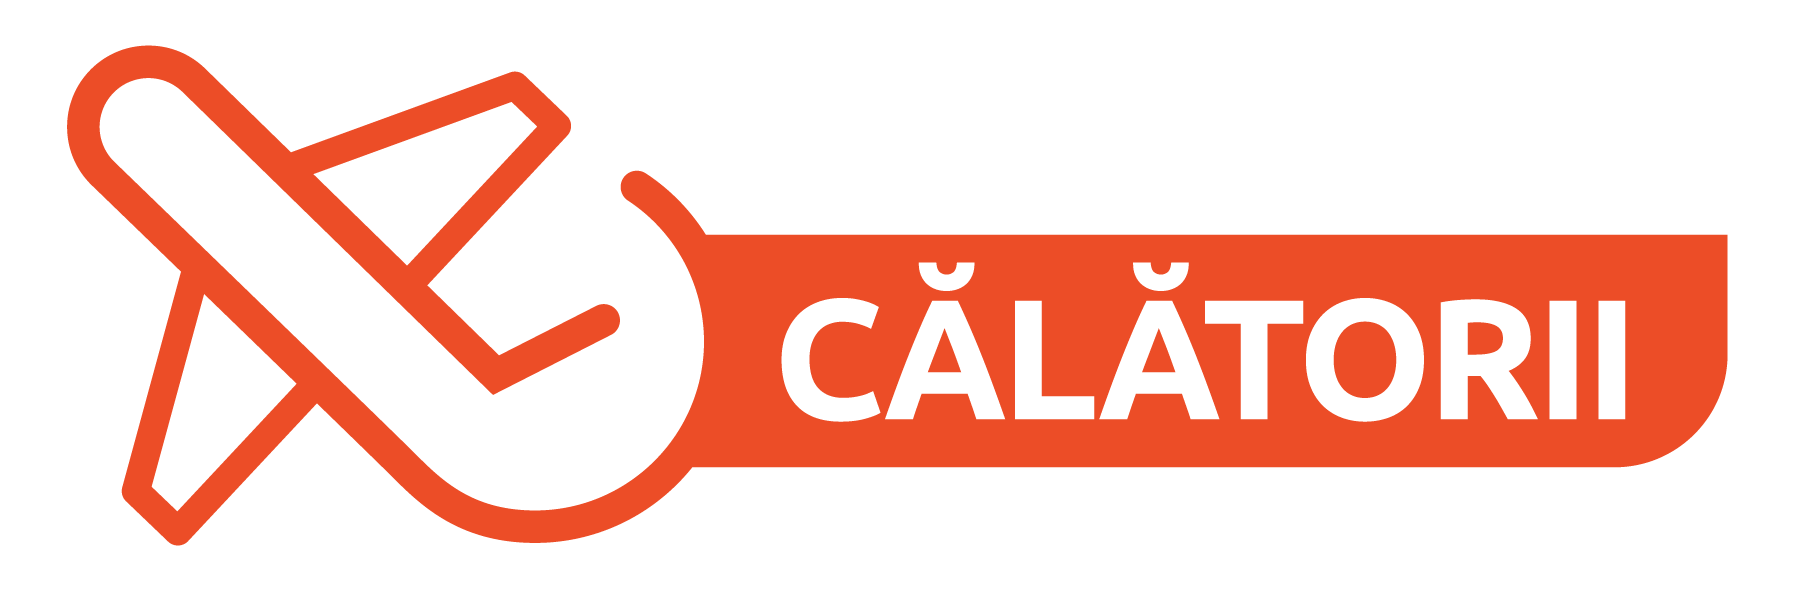 logo_calatorii-06